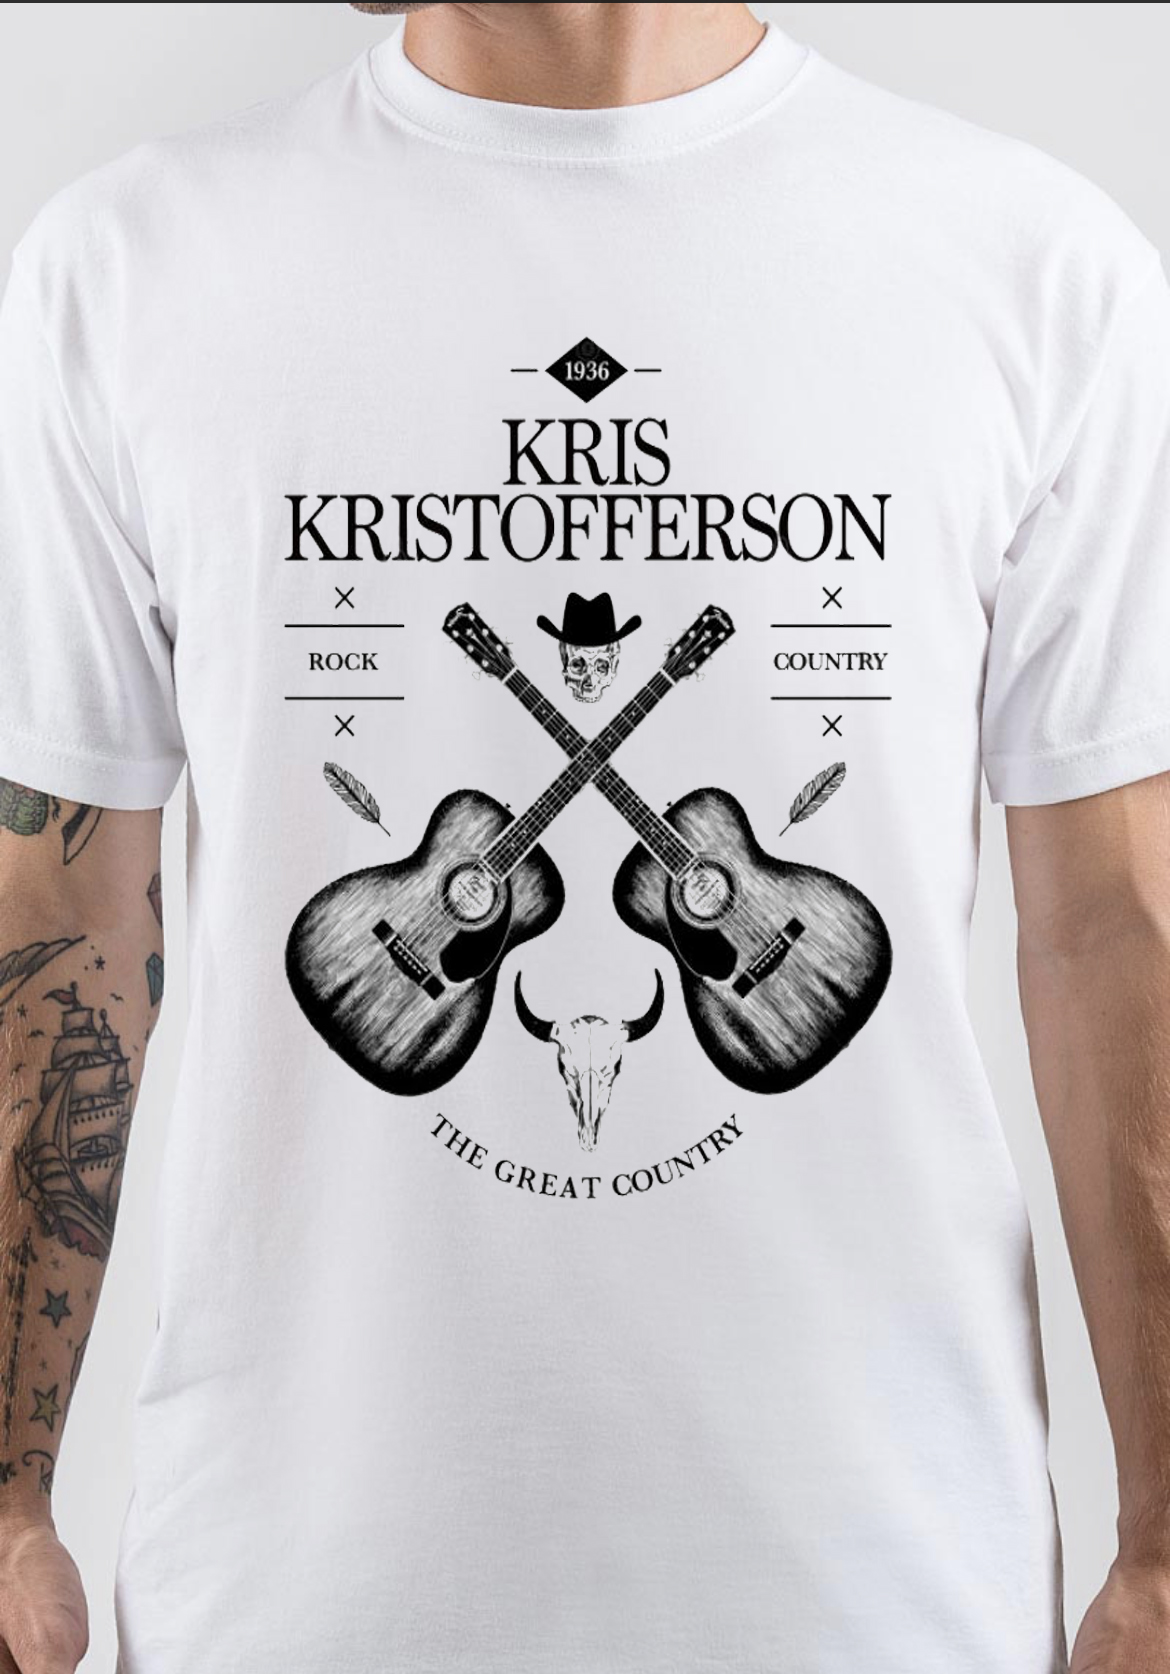 Kris Kristofferson T-Shirt And Merchandise